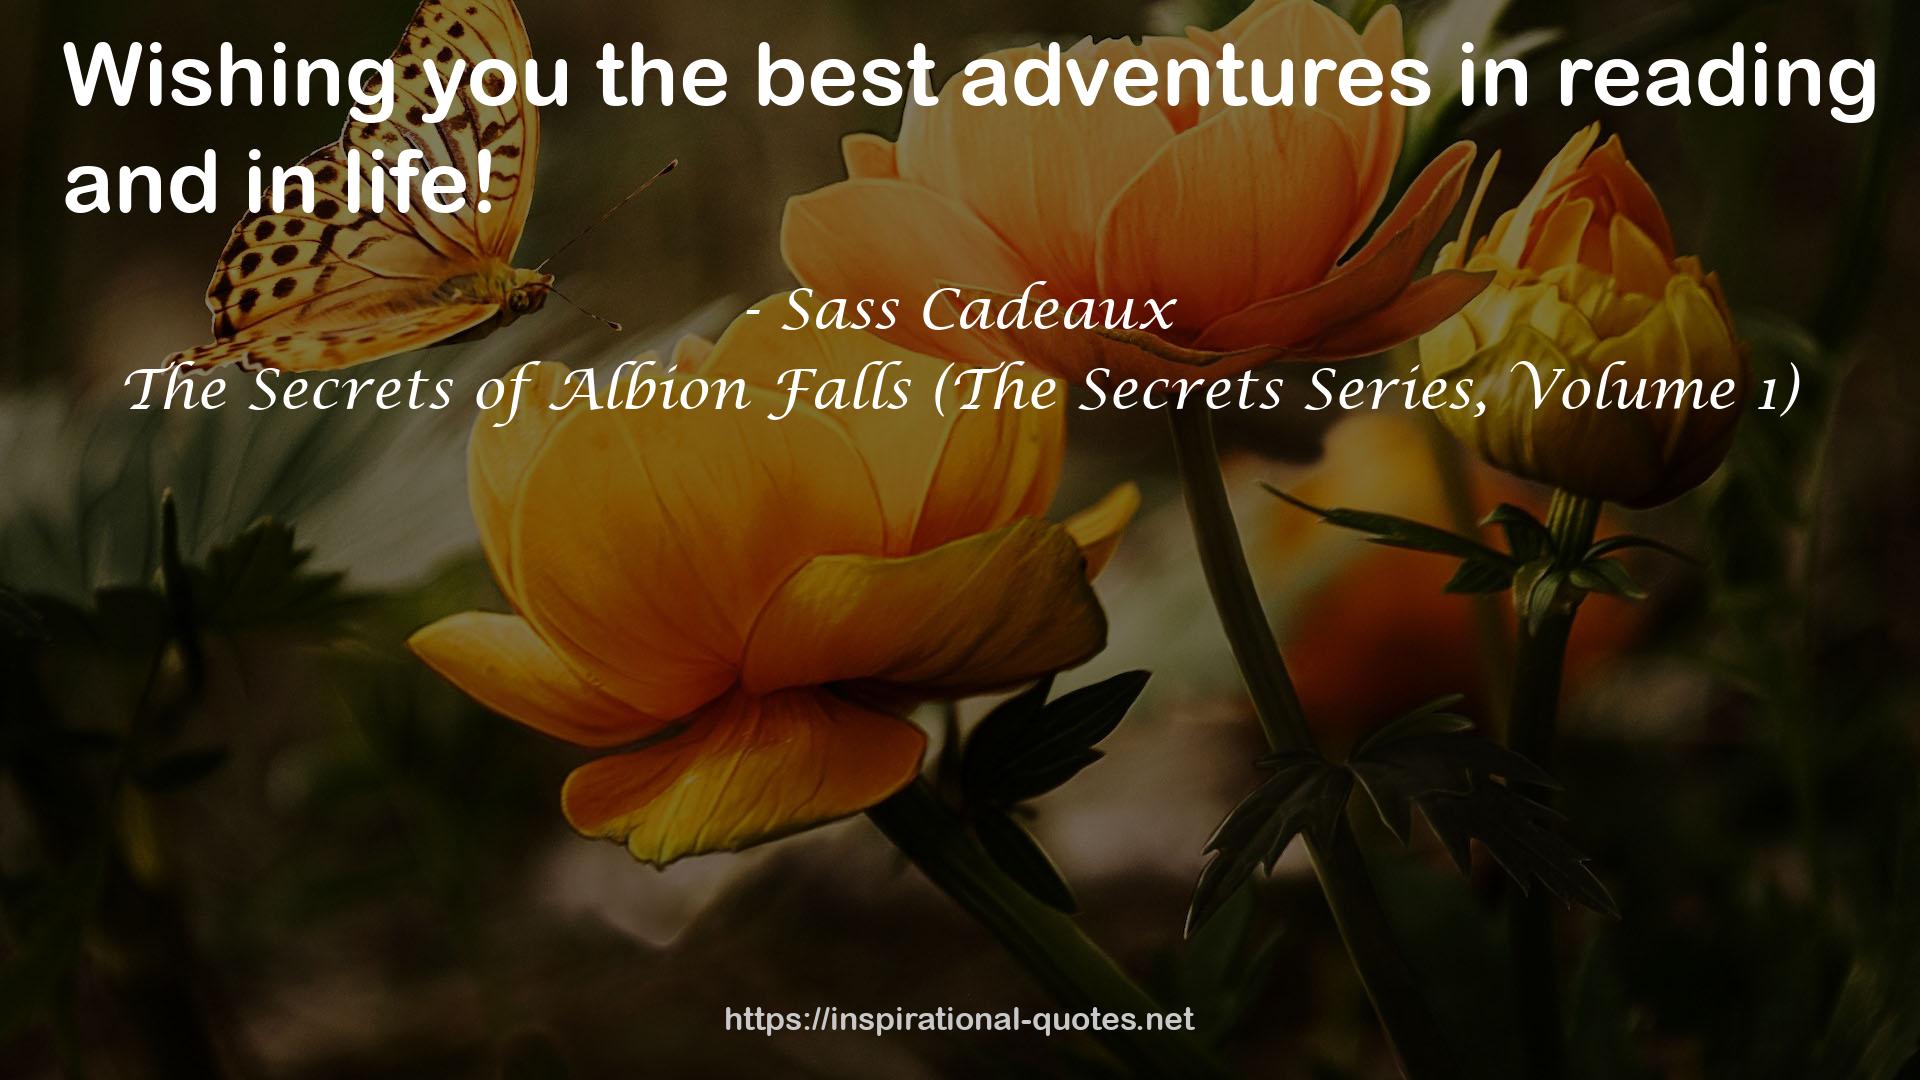 The Secrets of Albion Falls (The Secrets Series, Volume 1) QUOTES